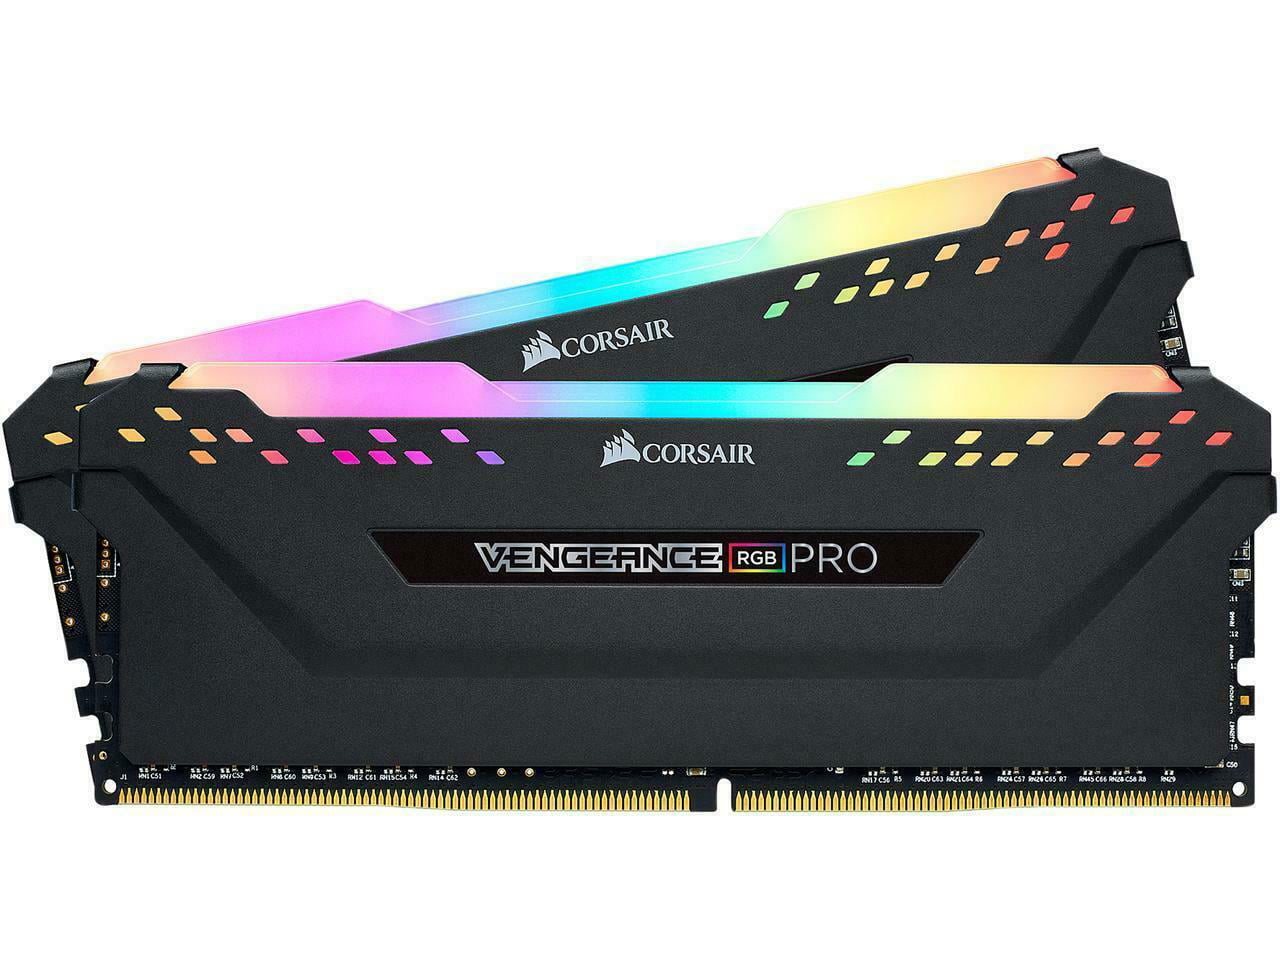 Black Dynamic RGB Lighting, Preset Lighting Profiles, Tight Response Times, Compatible with Intel & AMD 300/400/500 Series Corsair Vengeance RGB RS 16GB 2x8GB DDR4 3600MHz C18 Desktop Memory